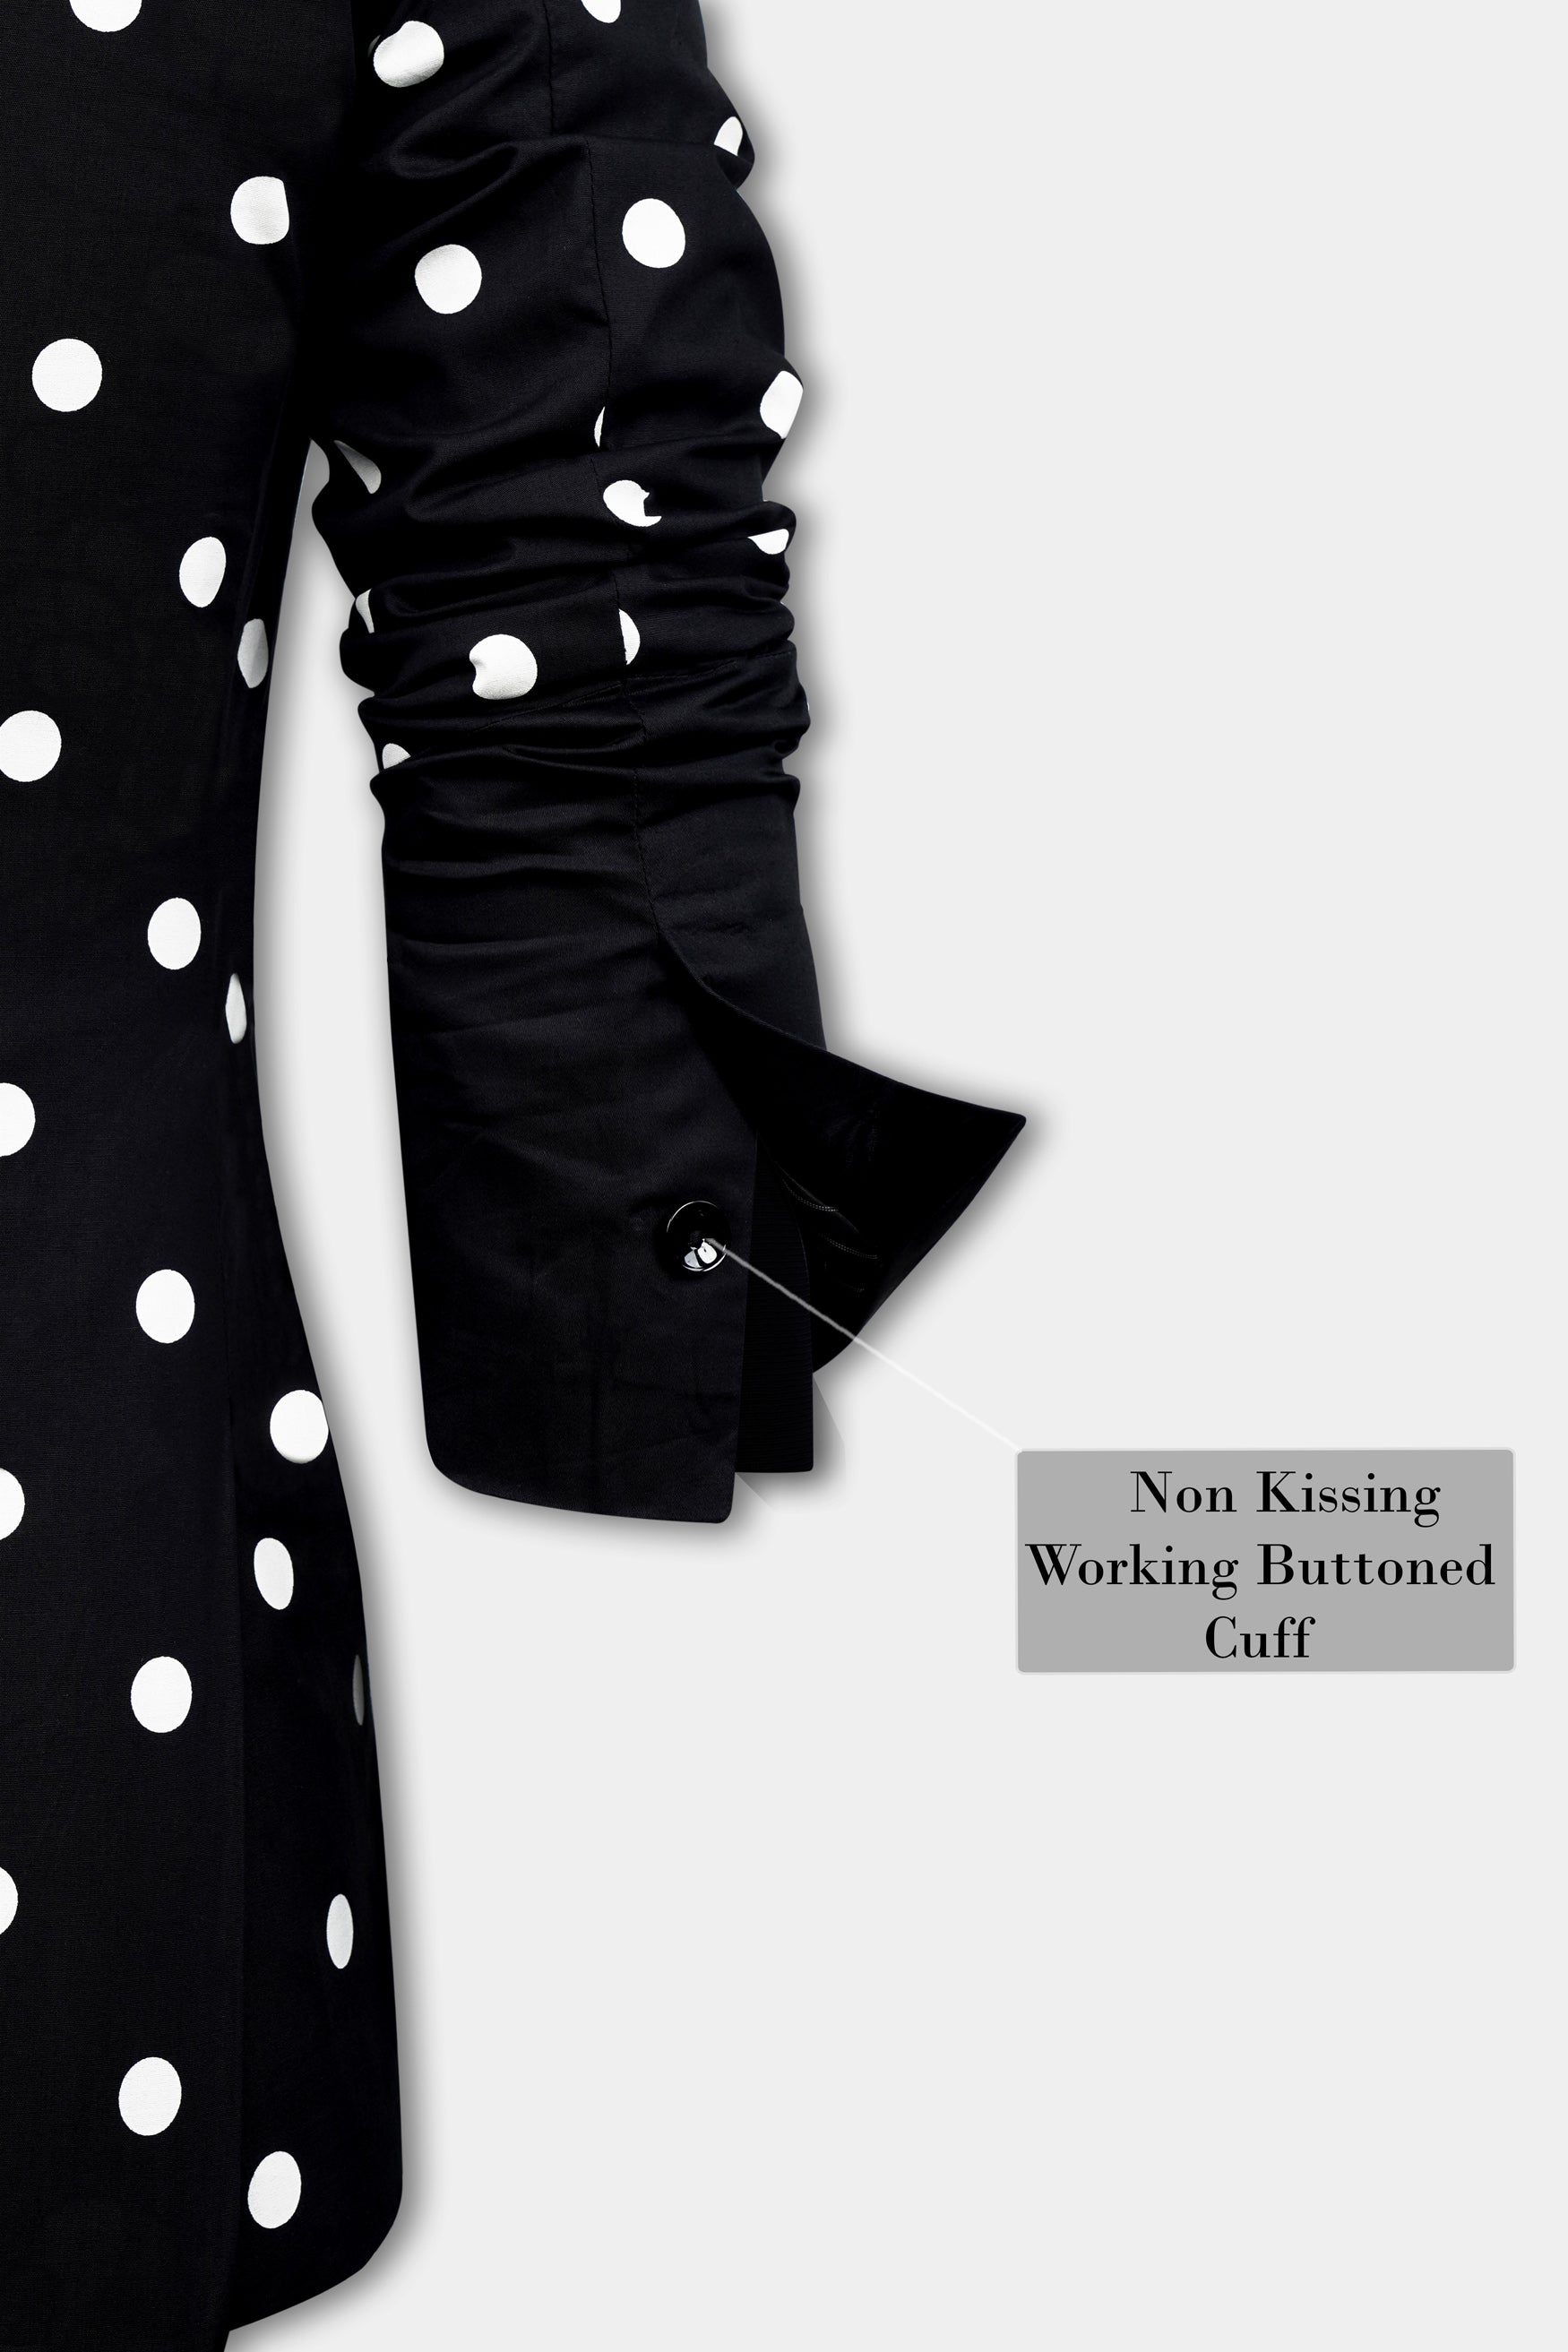 Jade Black and White Polka Dotted Premium Cotton Women’s Tuxedo Suit